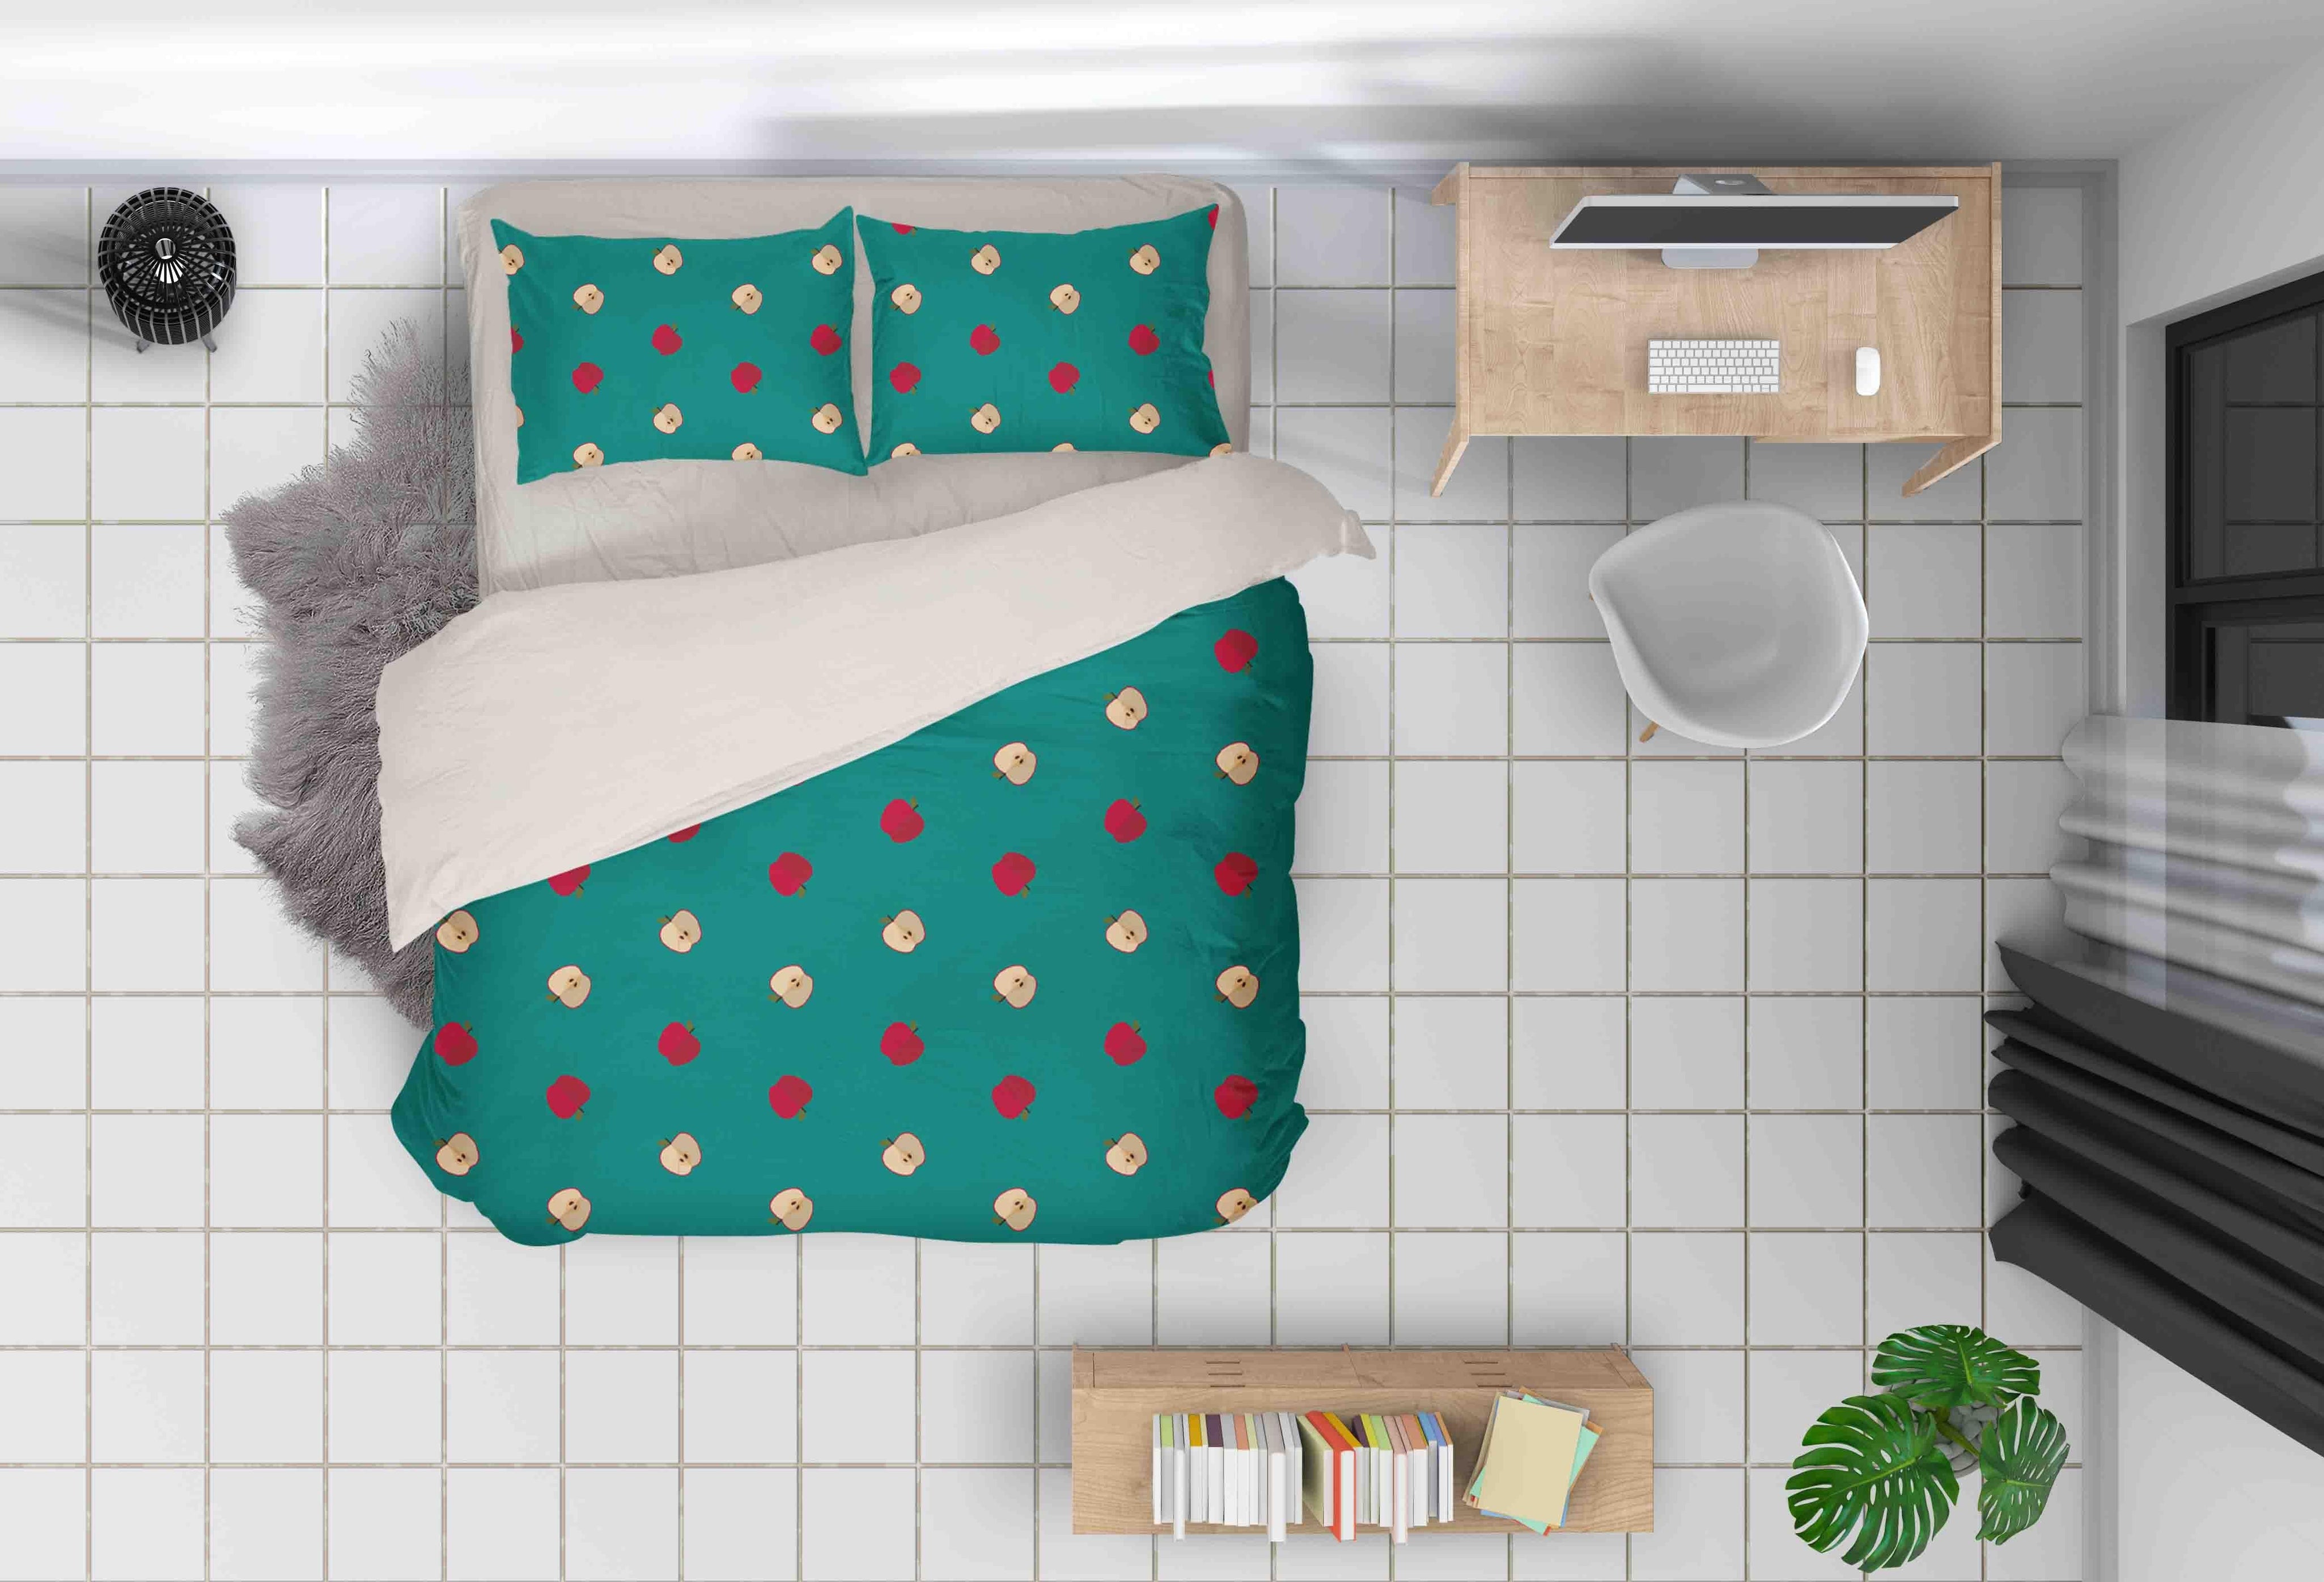 3D Apple Green Quilt Cover Set Bedding Set Pillowcases 71- Jess Art Decoration